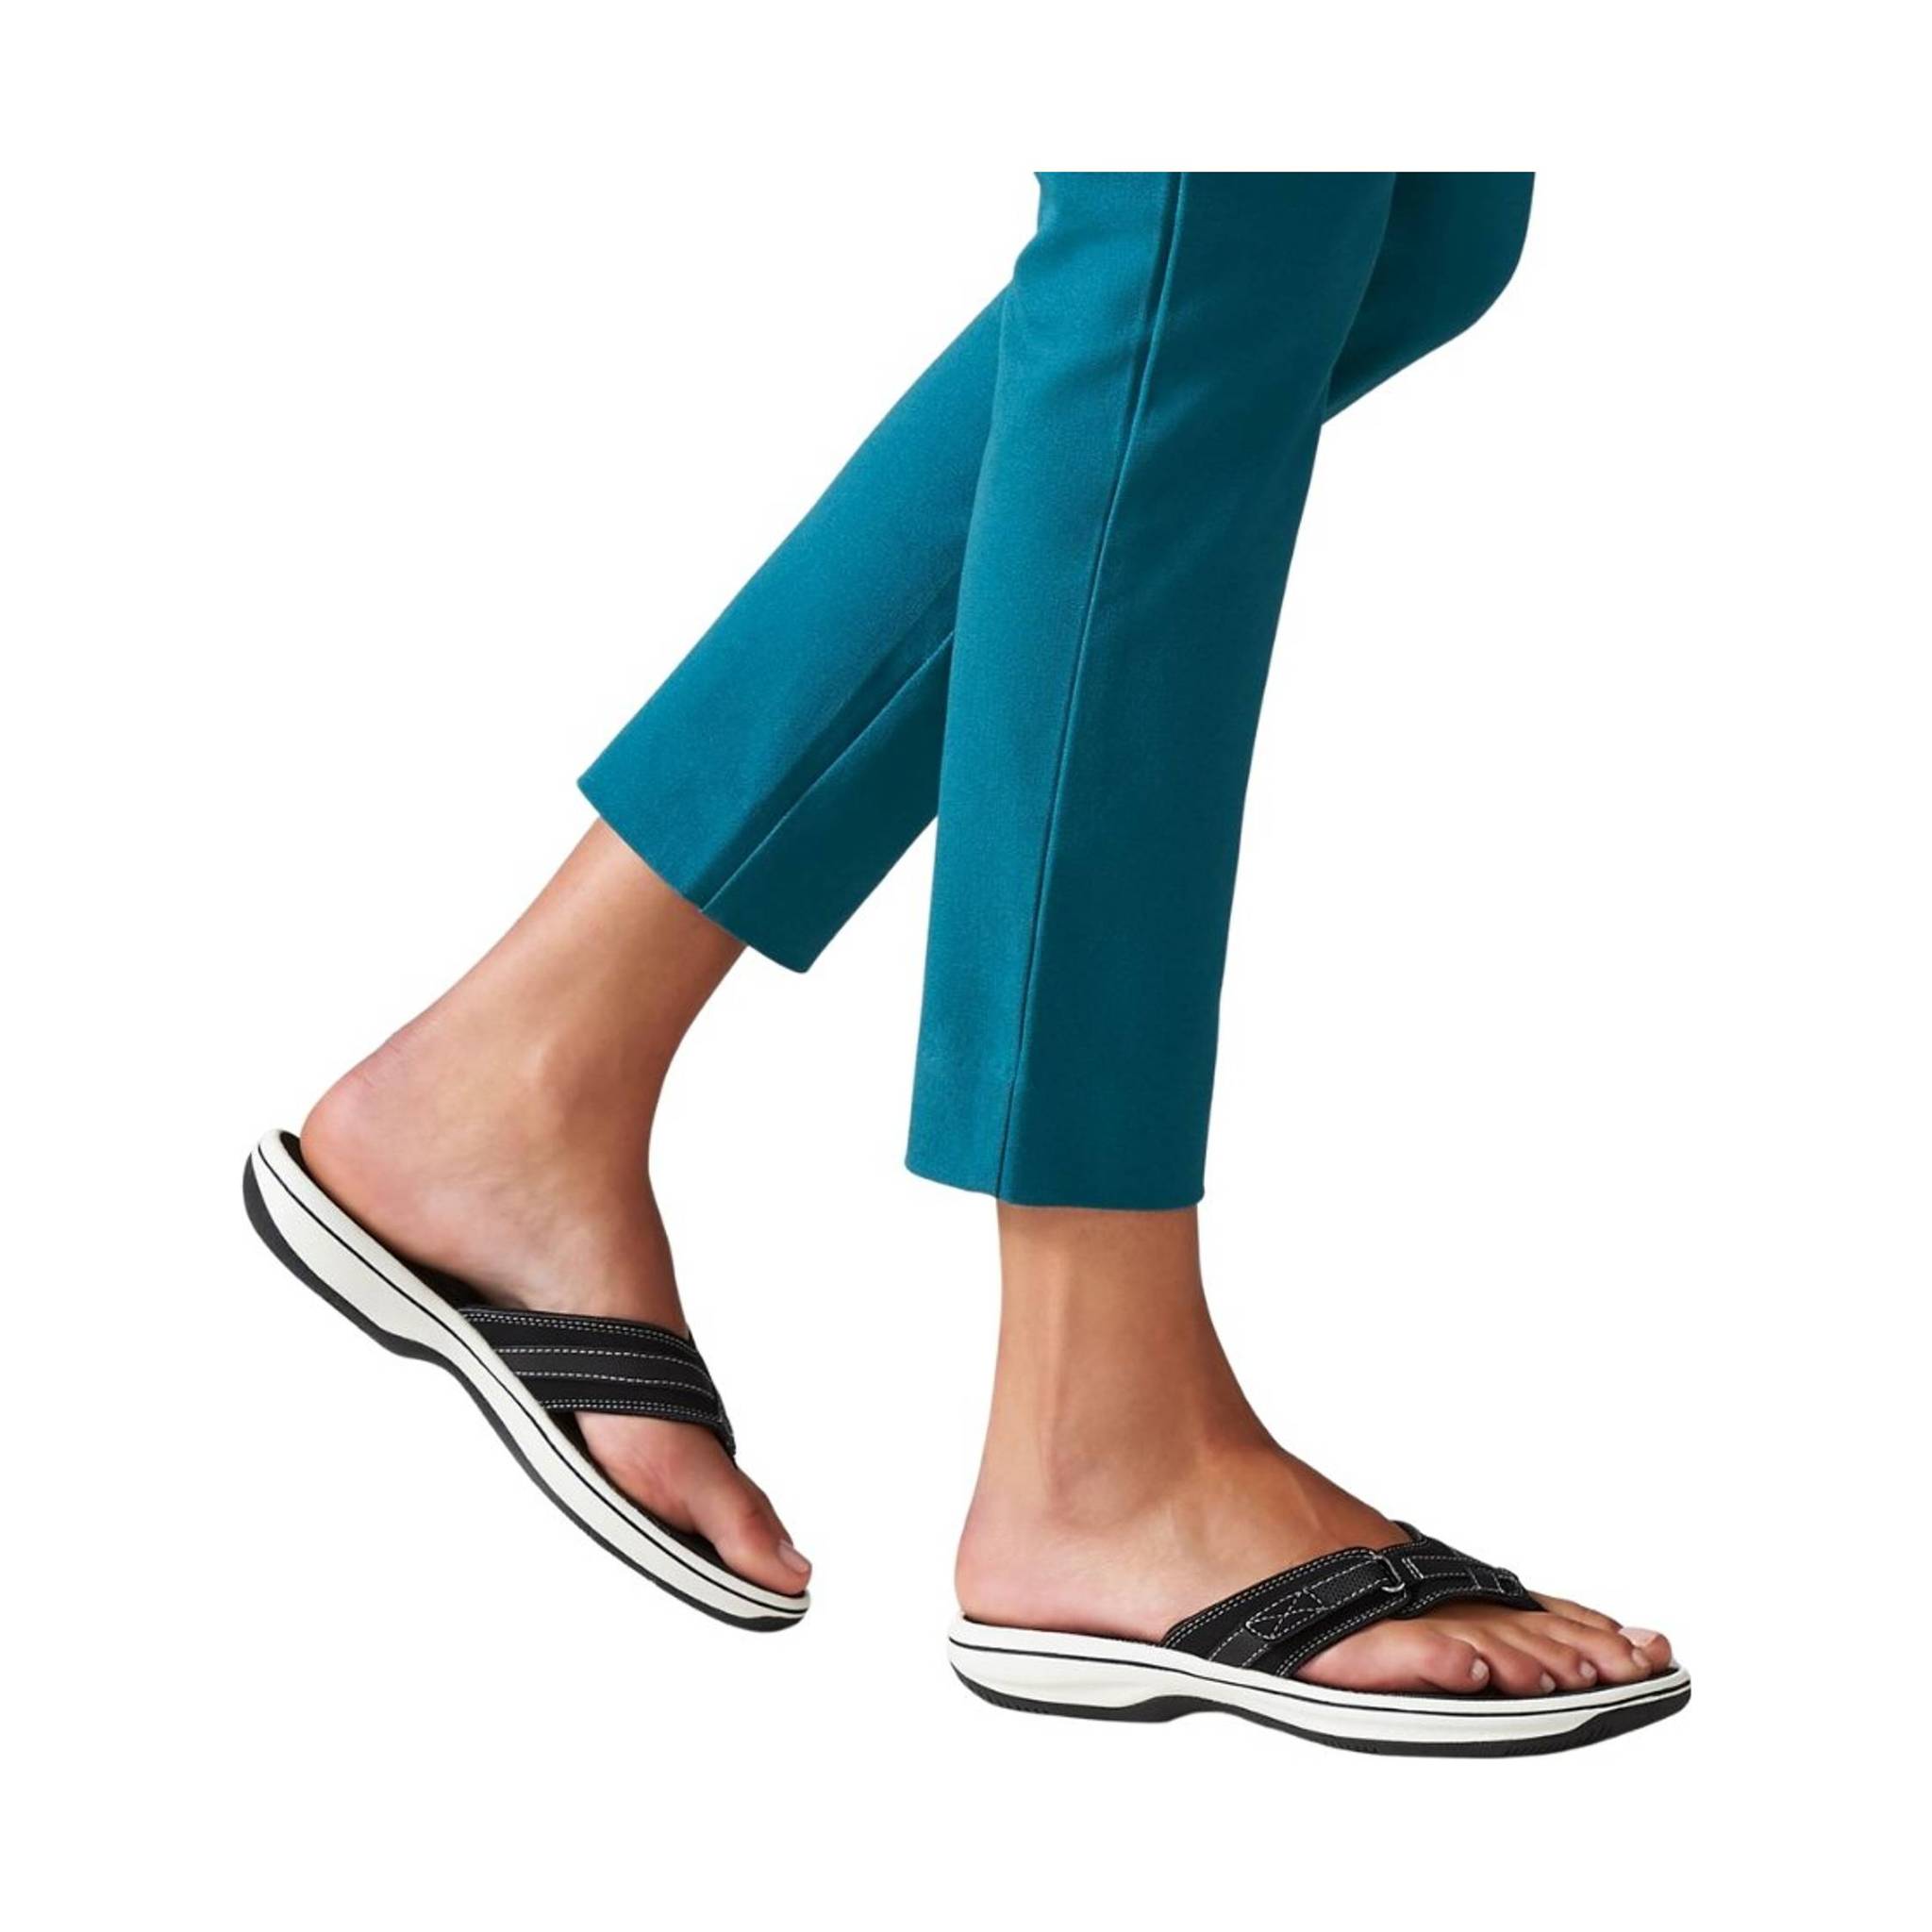 WOMENS Breeze Sea Black Synthetic Flip Flop Sandals